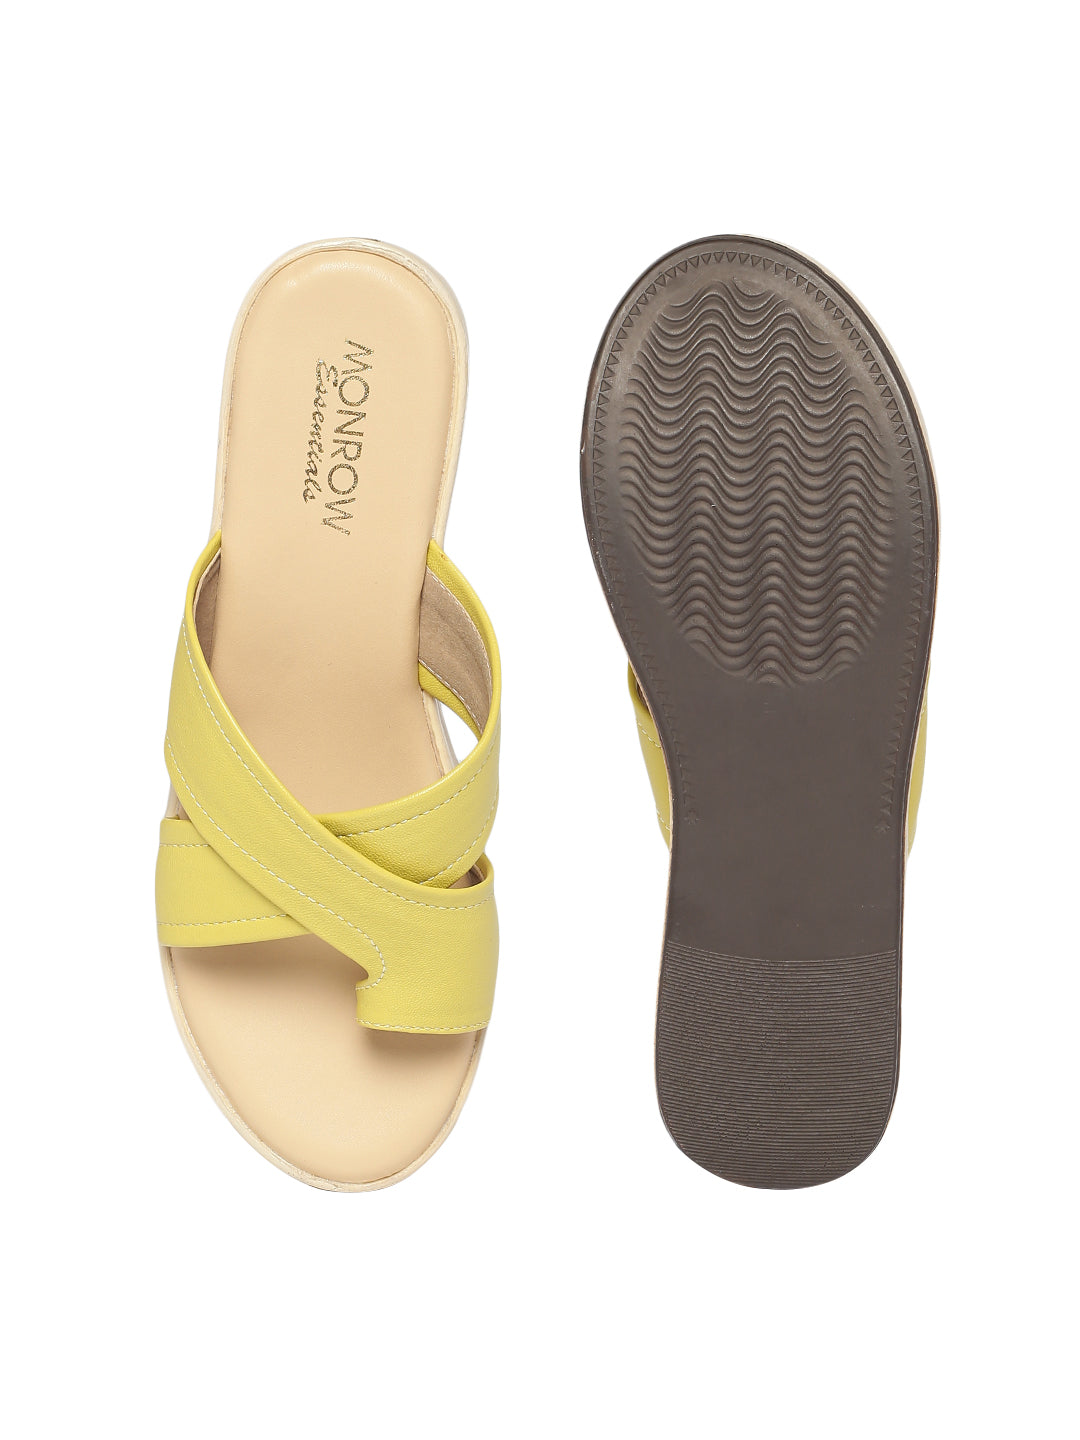 Yellow rhinestone platform heels sandals with... - Depop